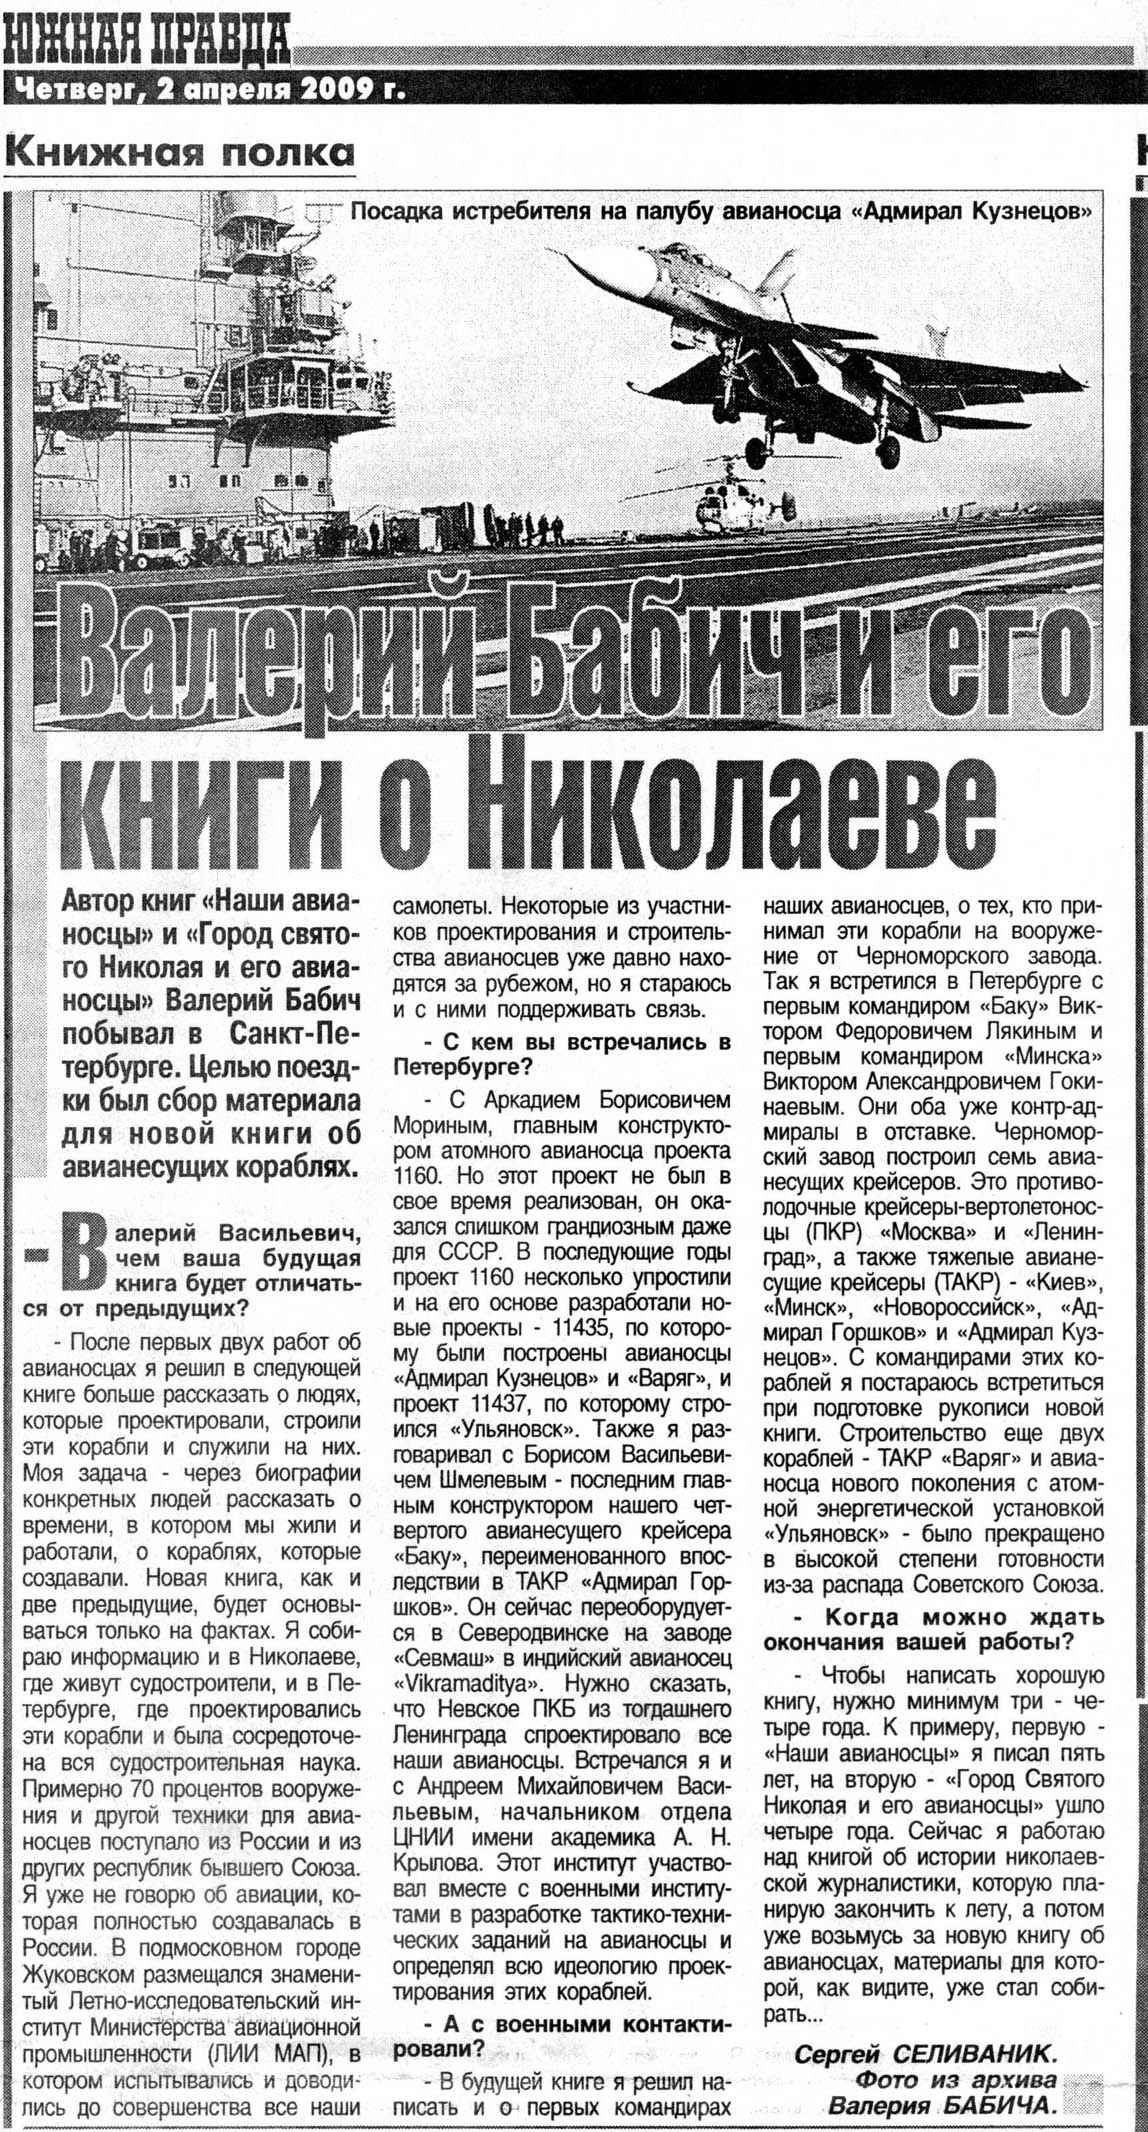 Copy of Южная правда 2.04.2009.jpg